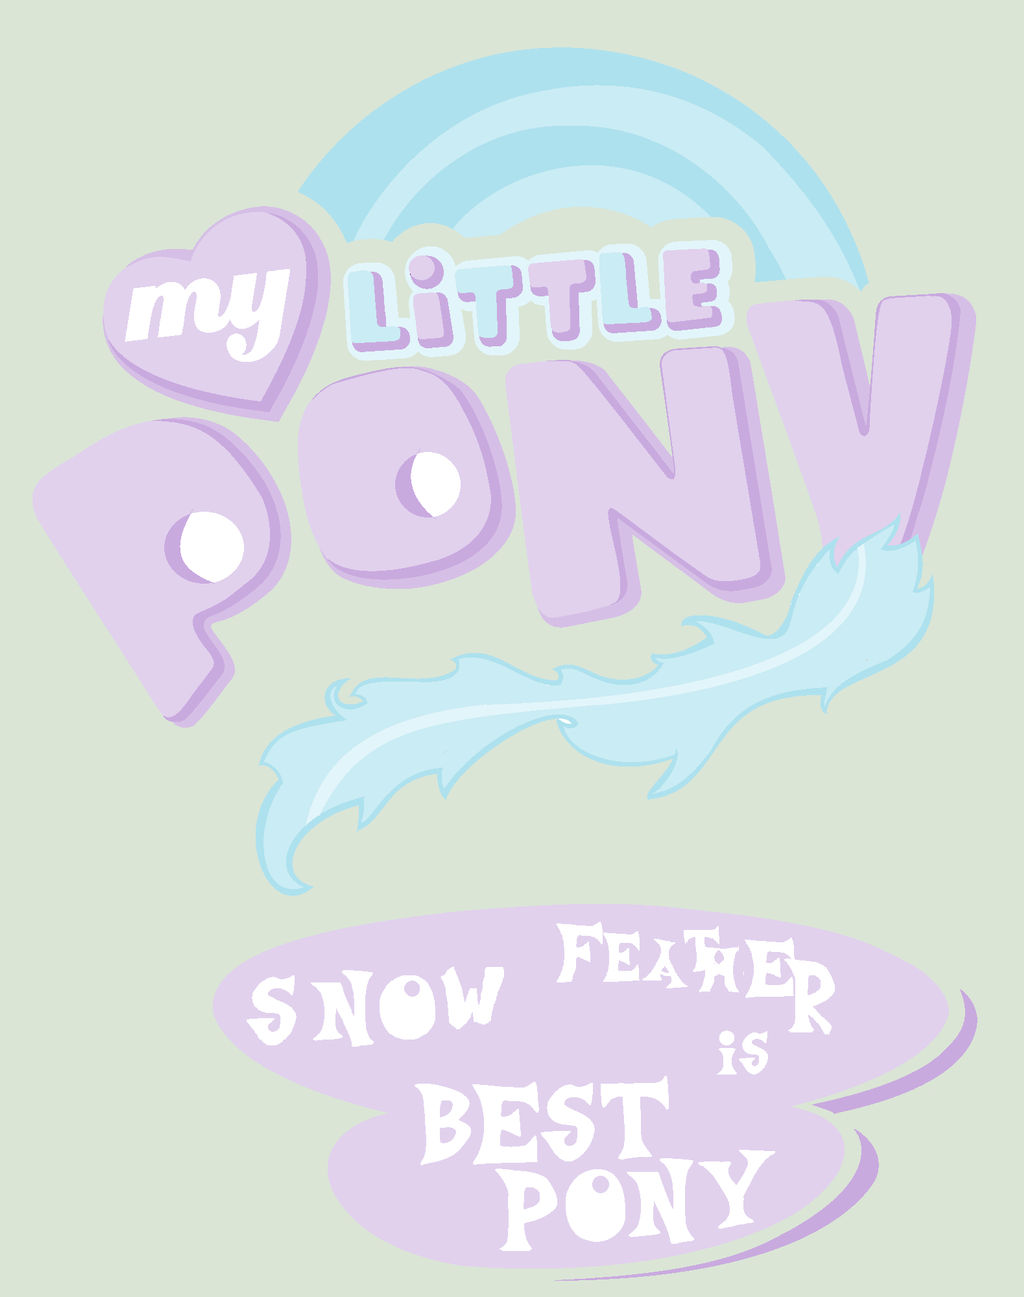 Snow Feather is best pony!